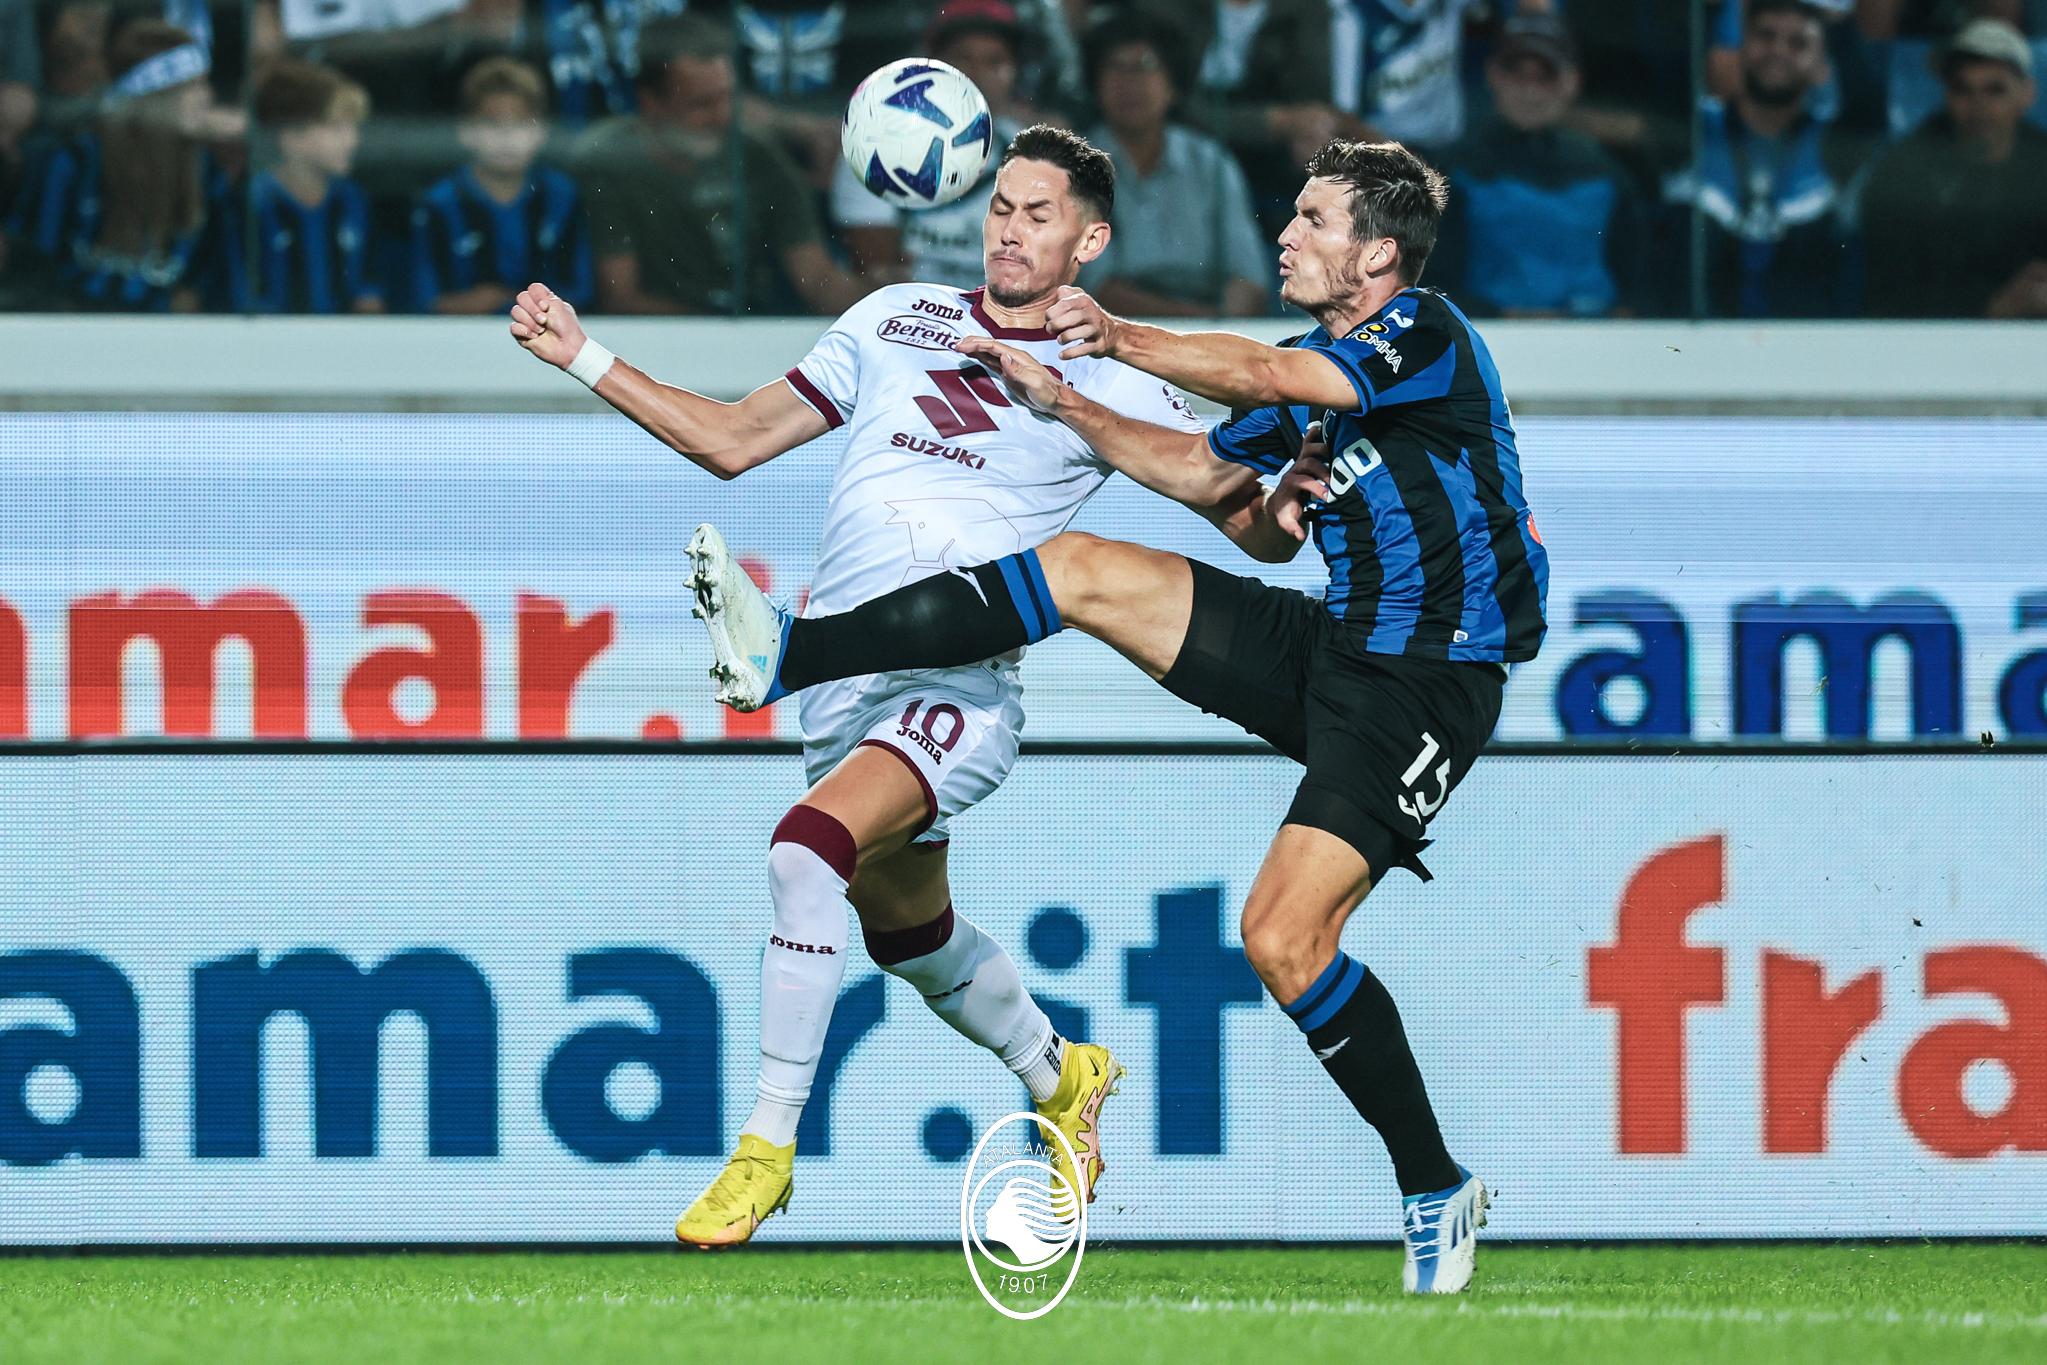 Torino x Atalanta: AO VIVO - Onde assistir? - Campeonato Italiano (Série A)